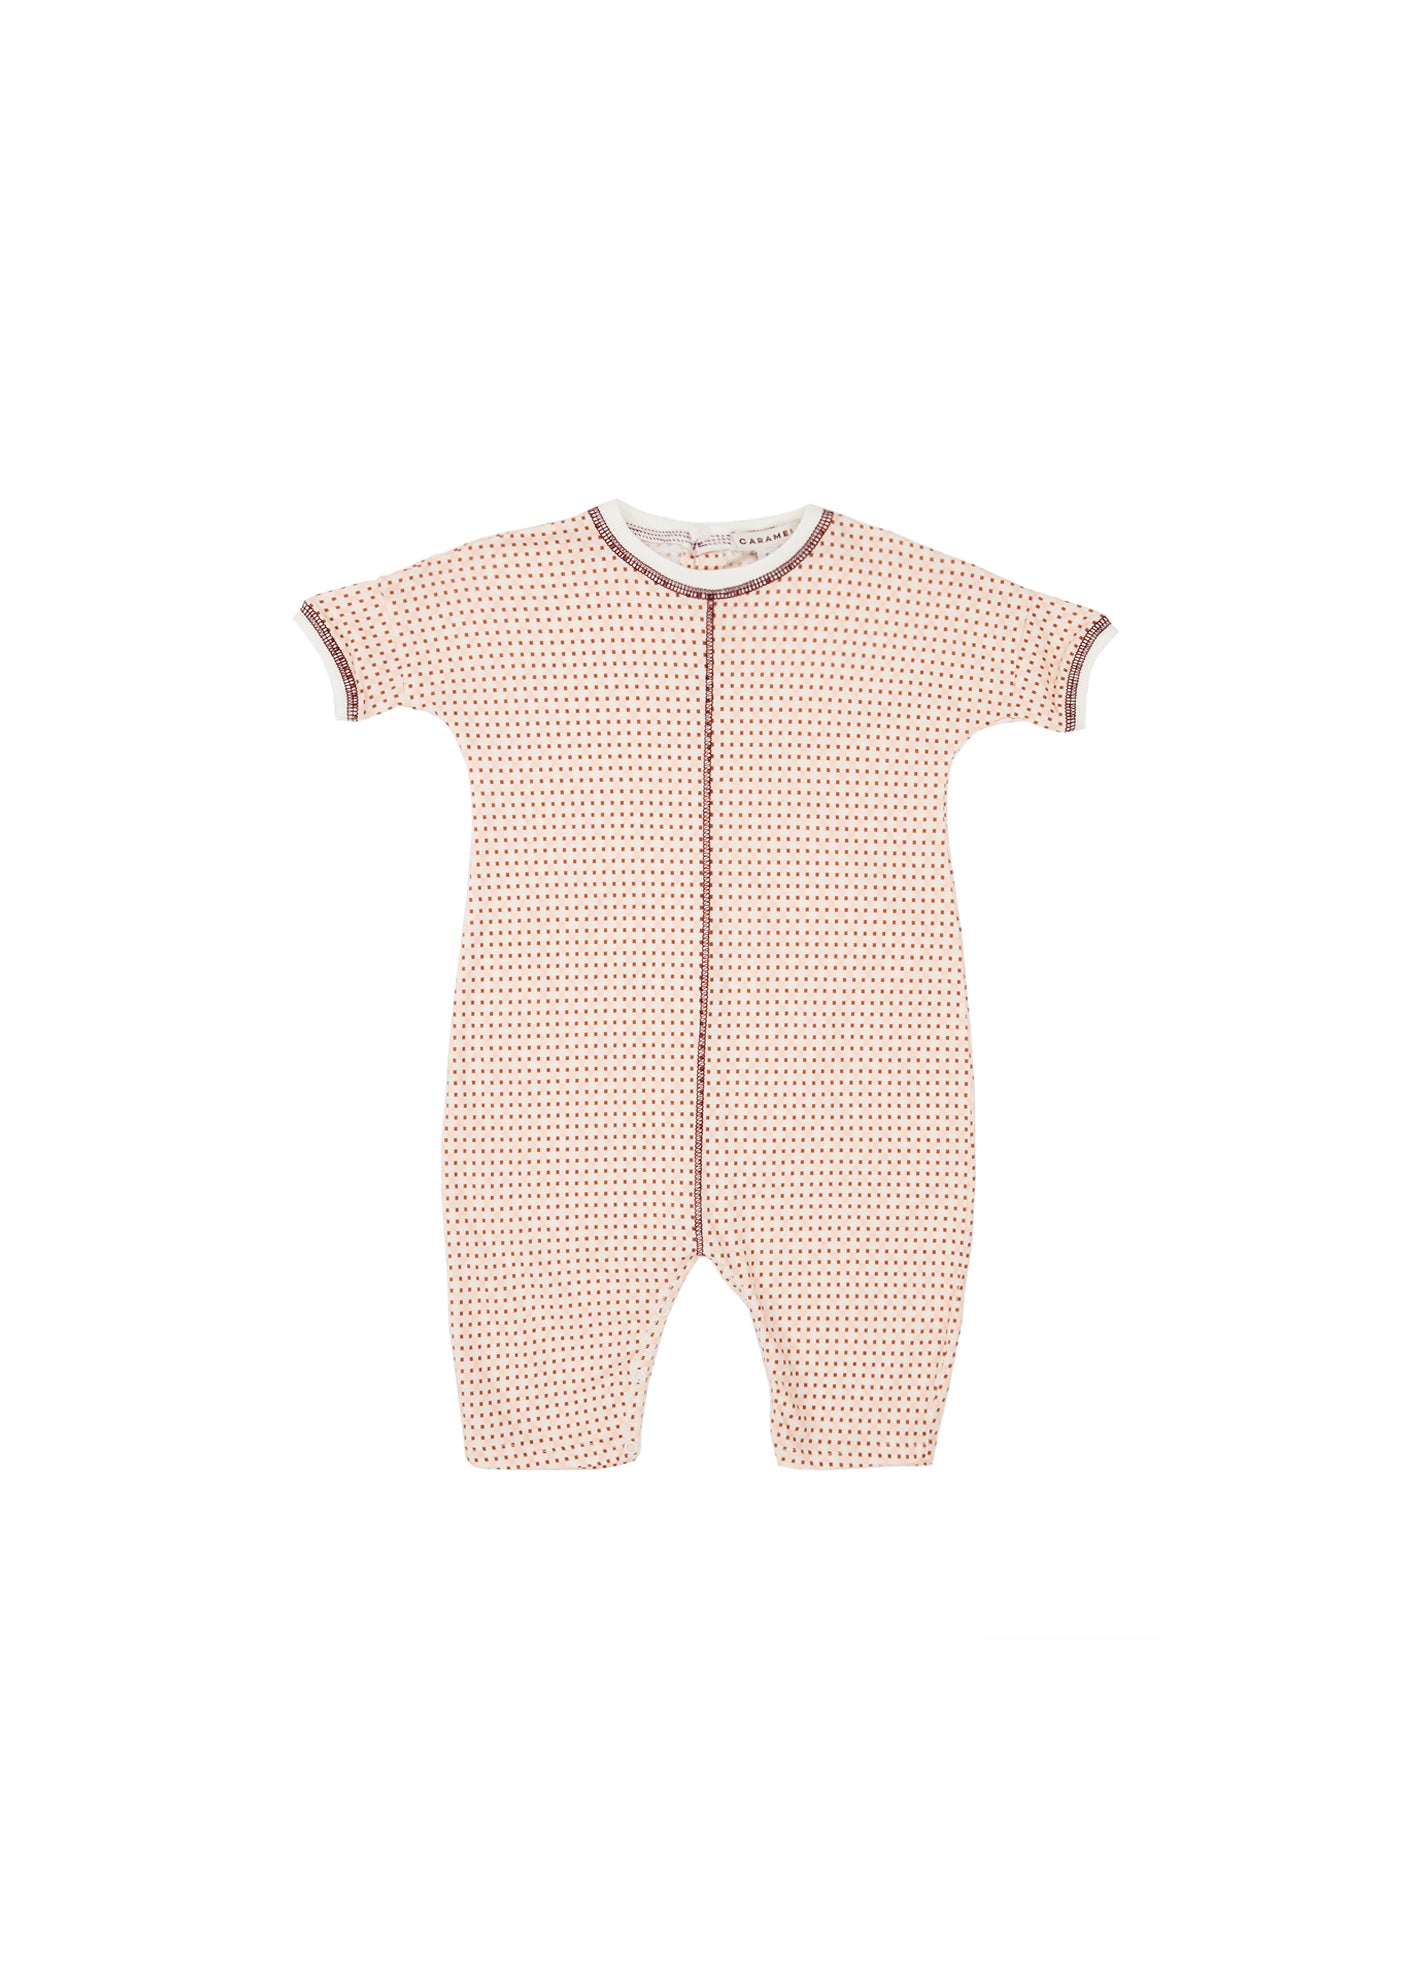 Baby Girls Light Pink Check Cotton Babysuit